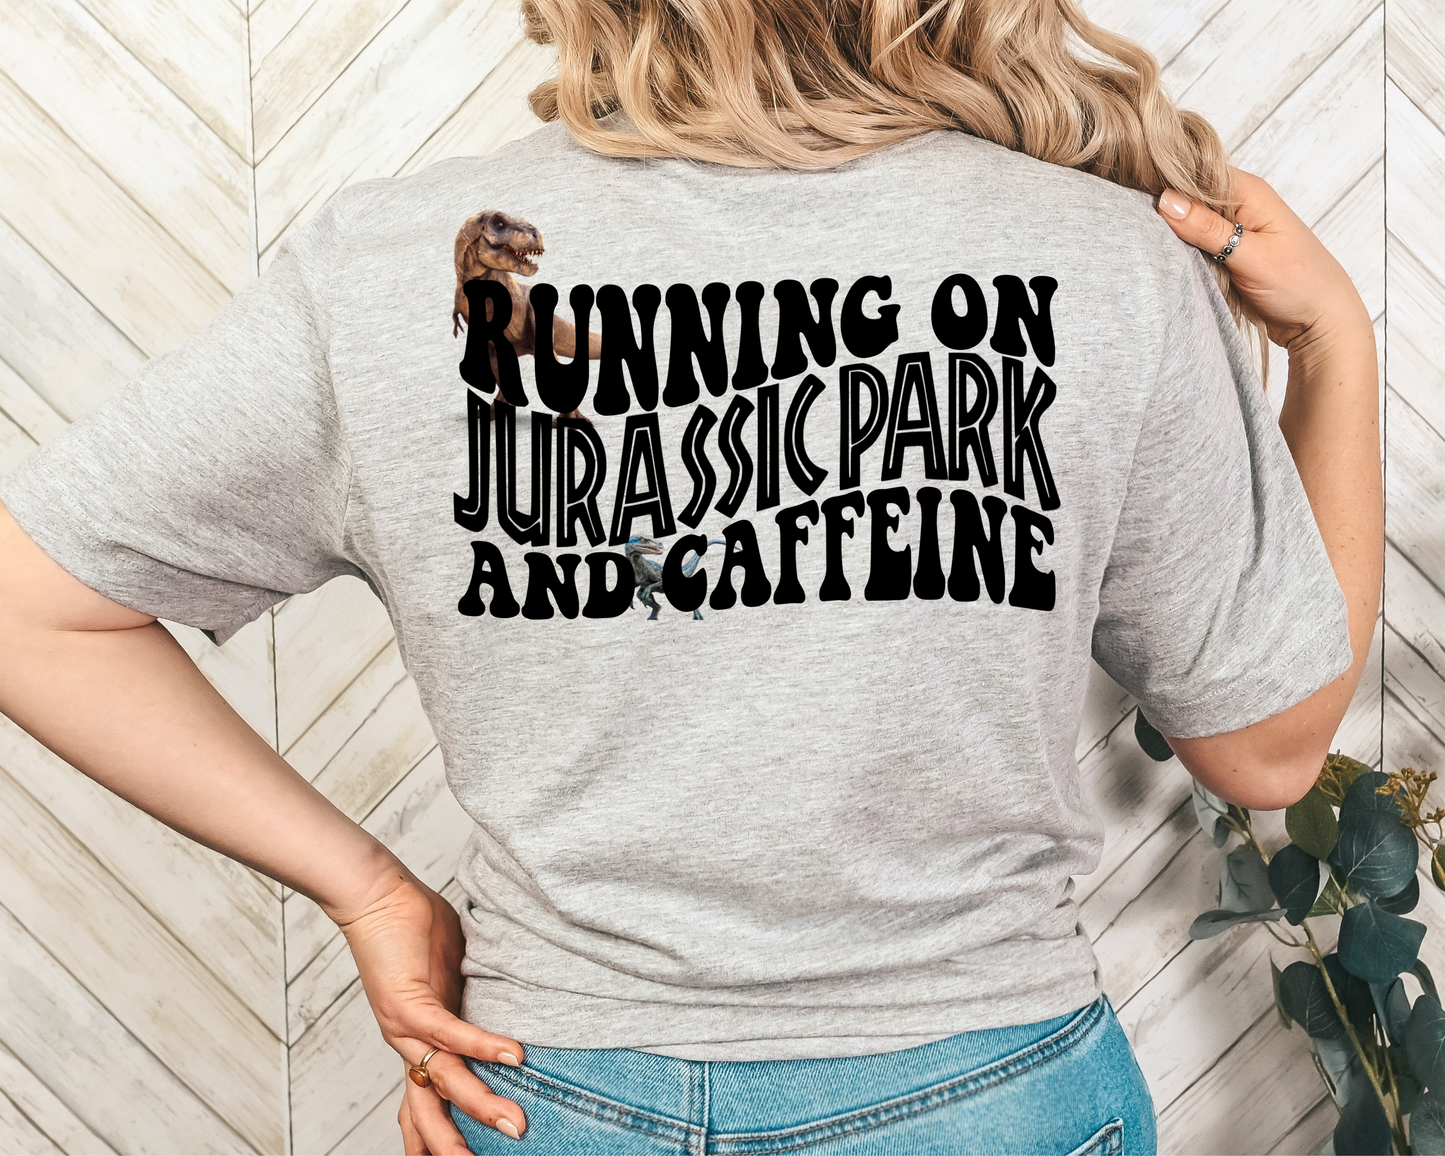 Running on Jurrassic Park and Caffeine